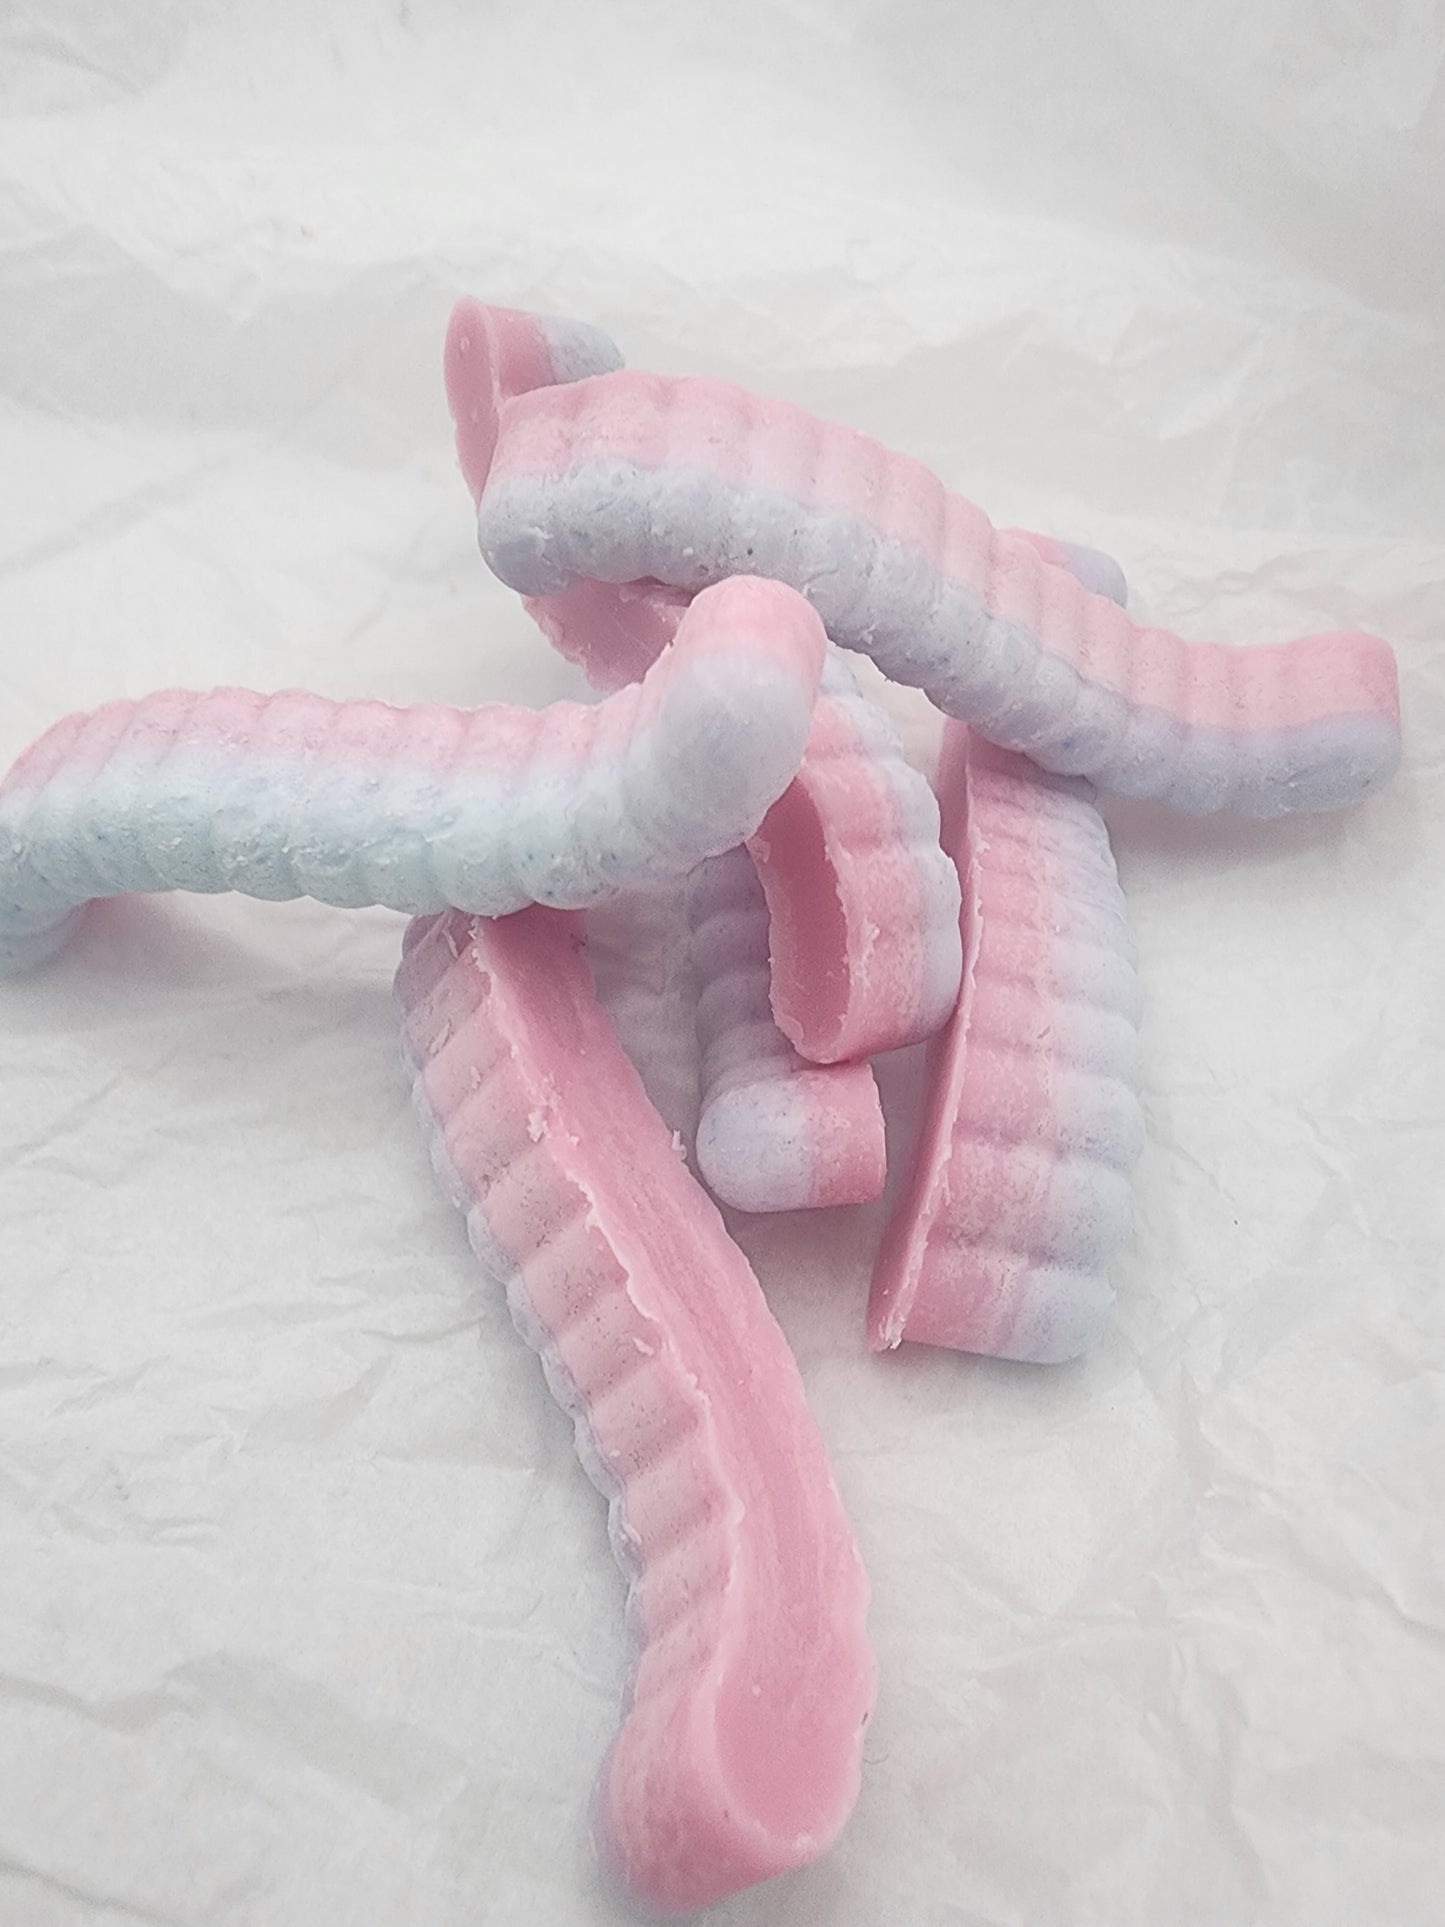 Gummy Worms (soy sensations /body bar)